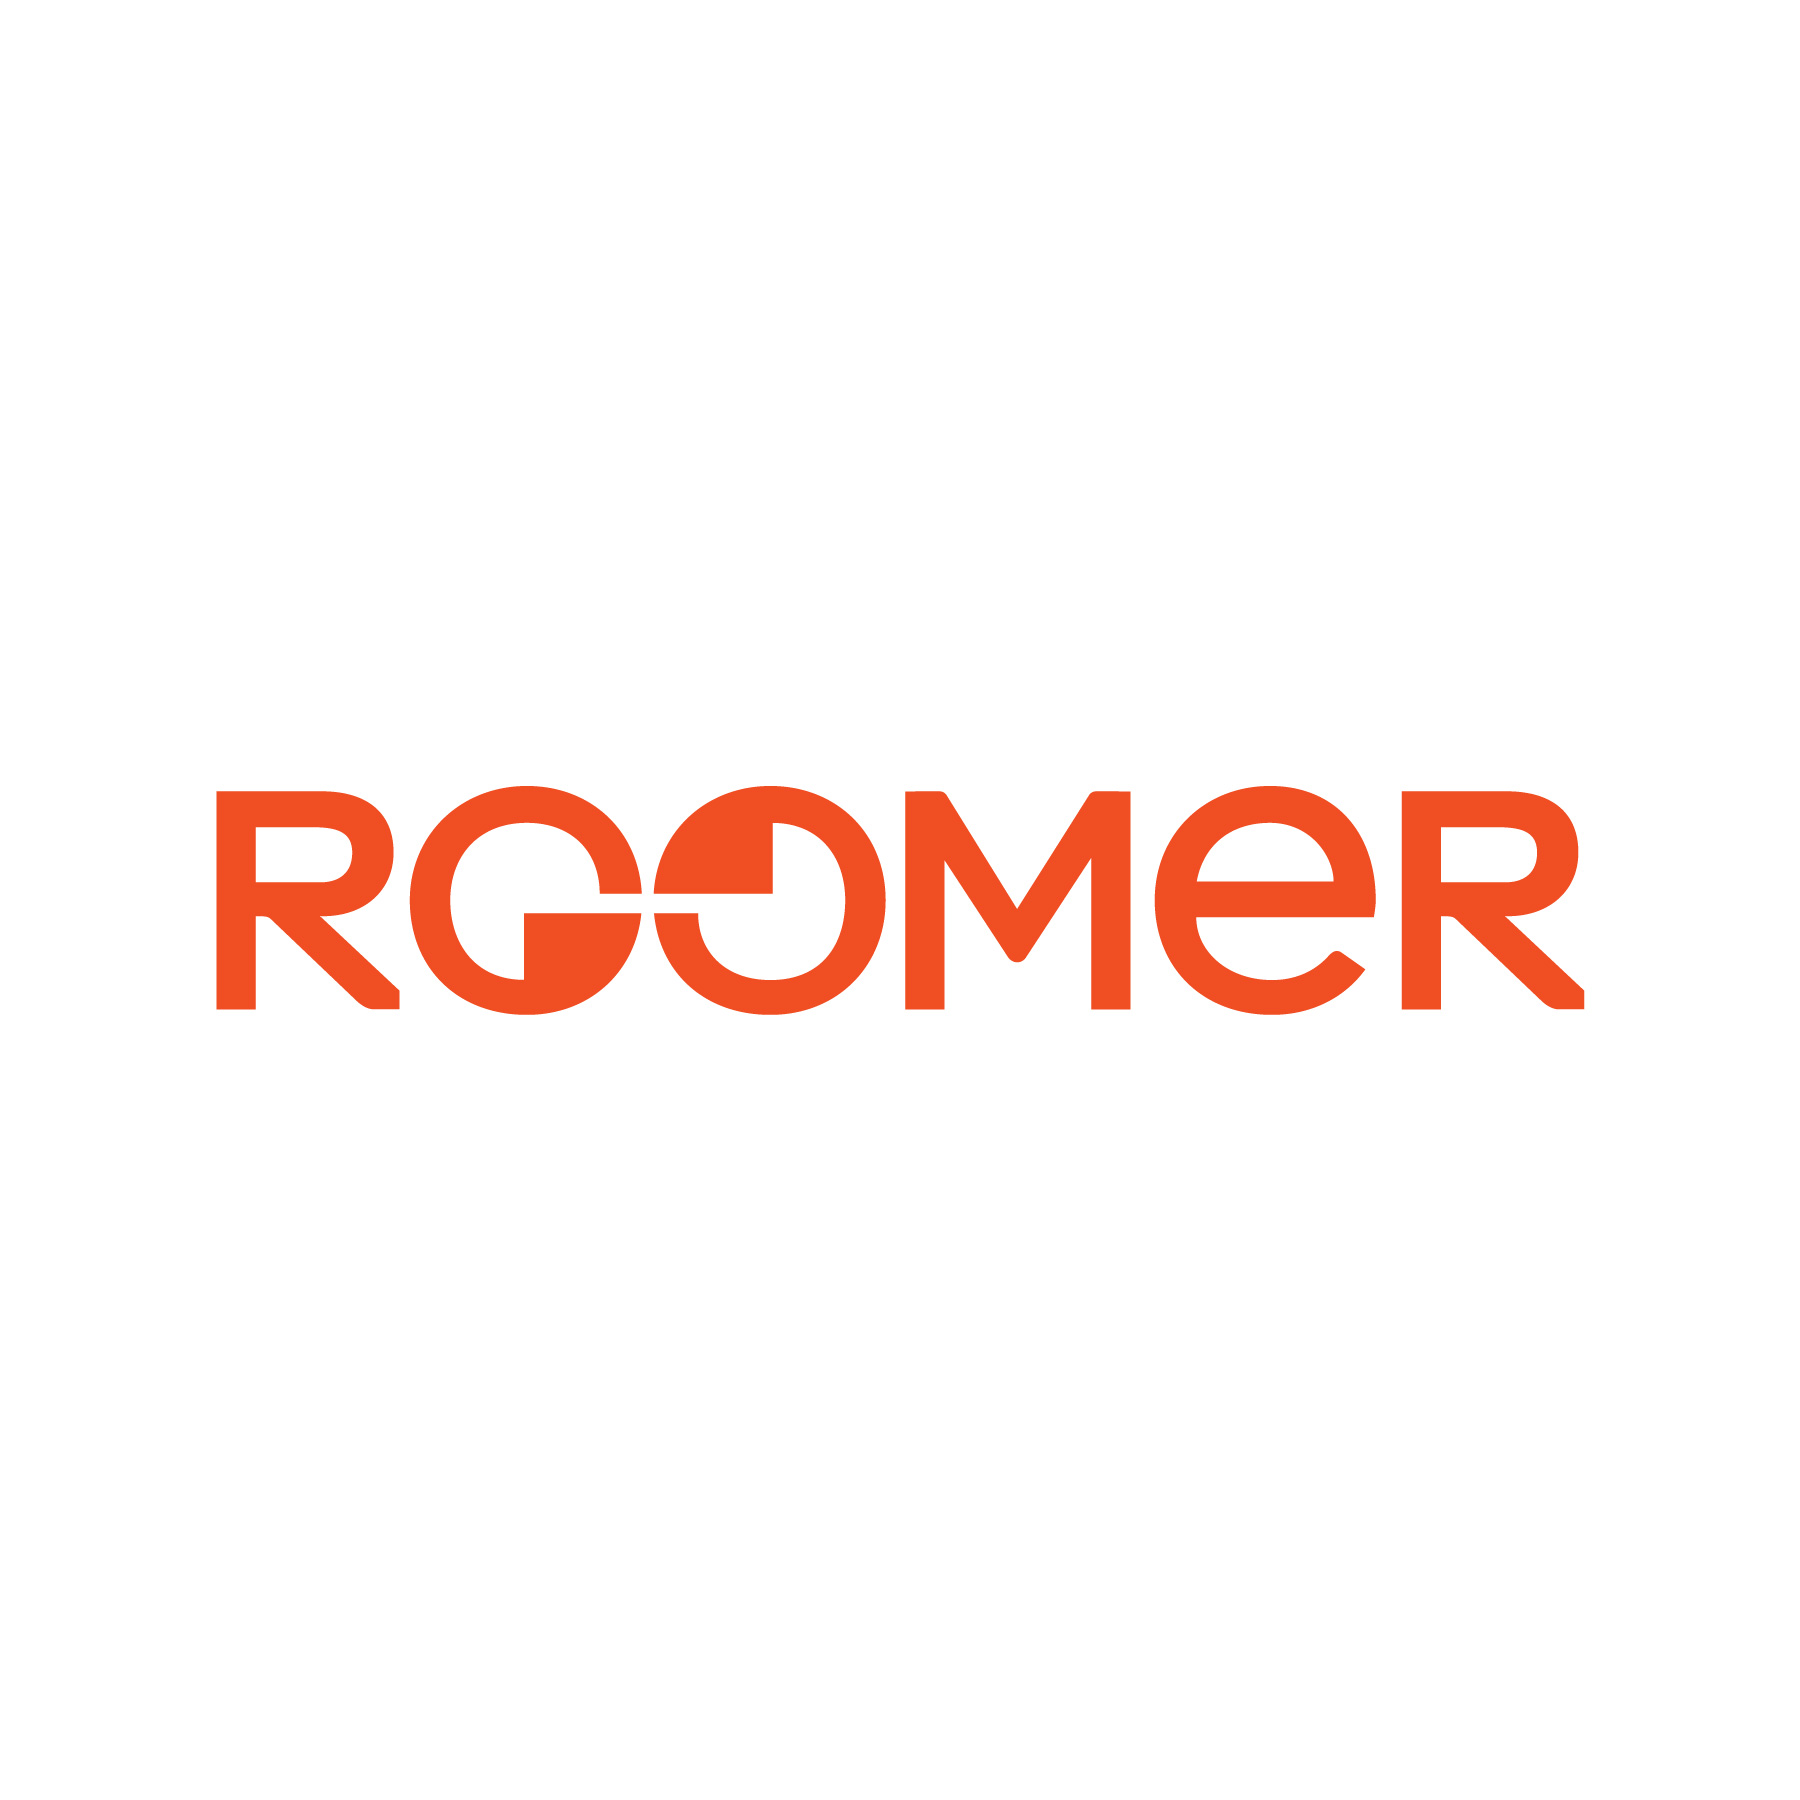 Roomer Corporate identity